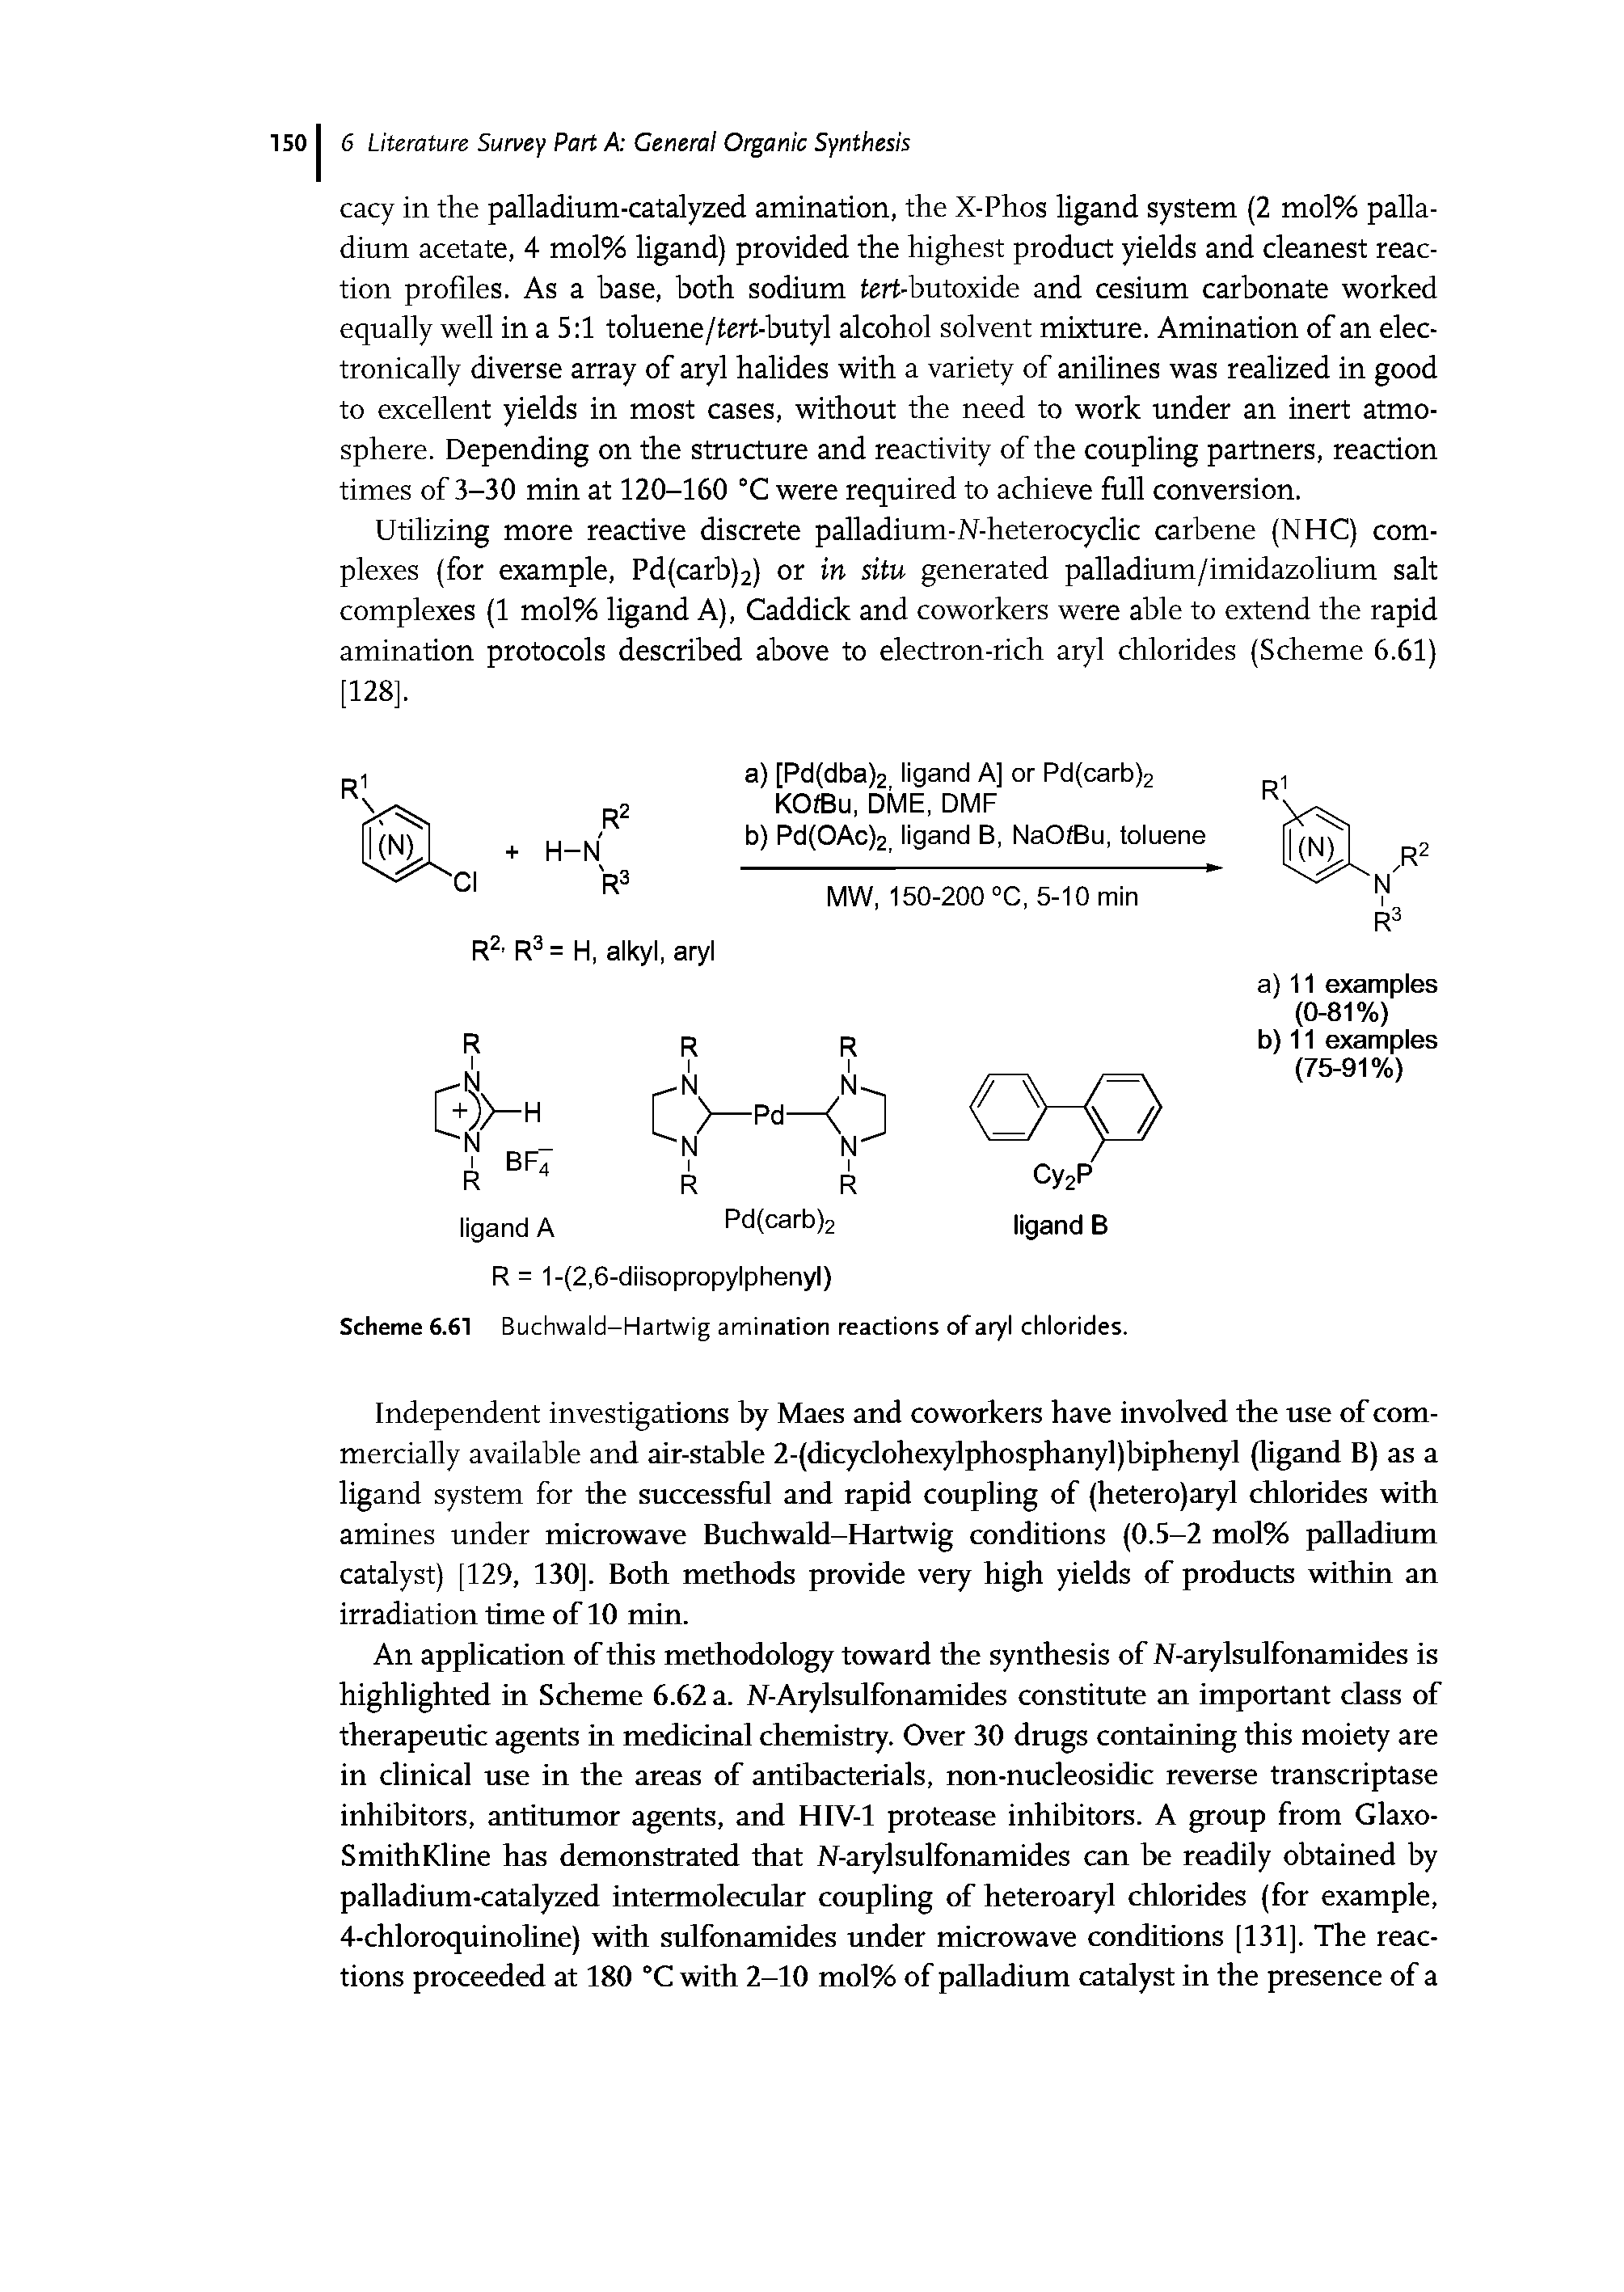 Scheme 6.61 Buchwald-Hartwig amination reactions of aryl chlorides.